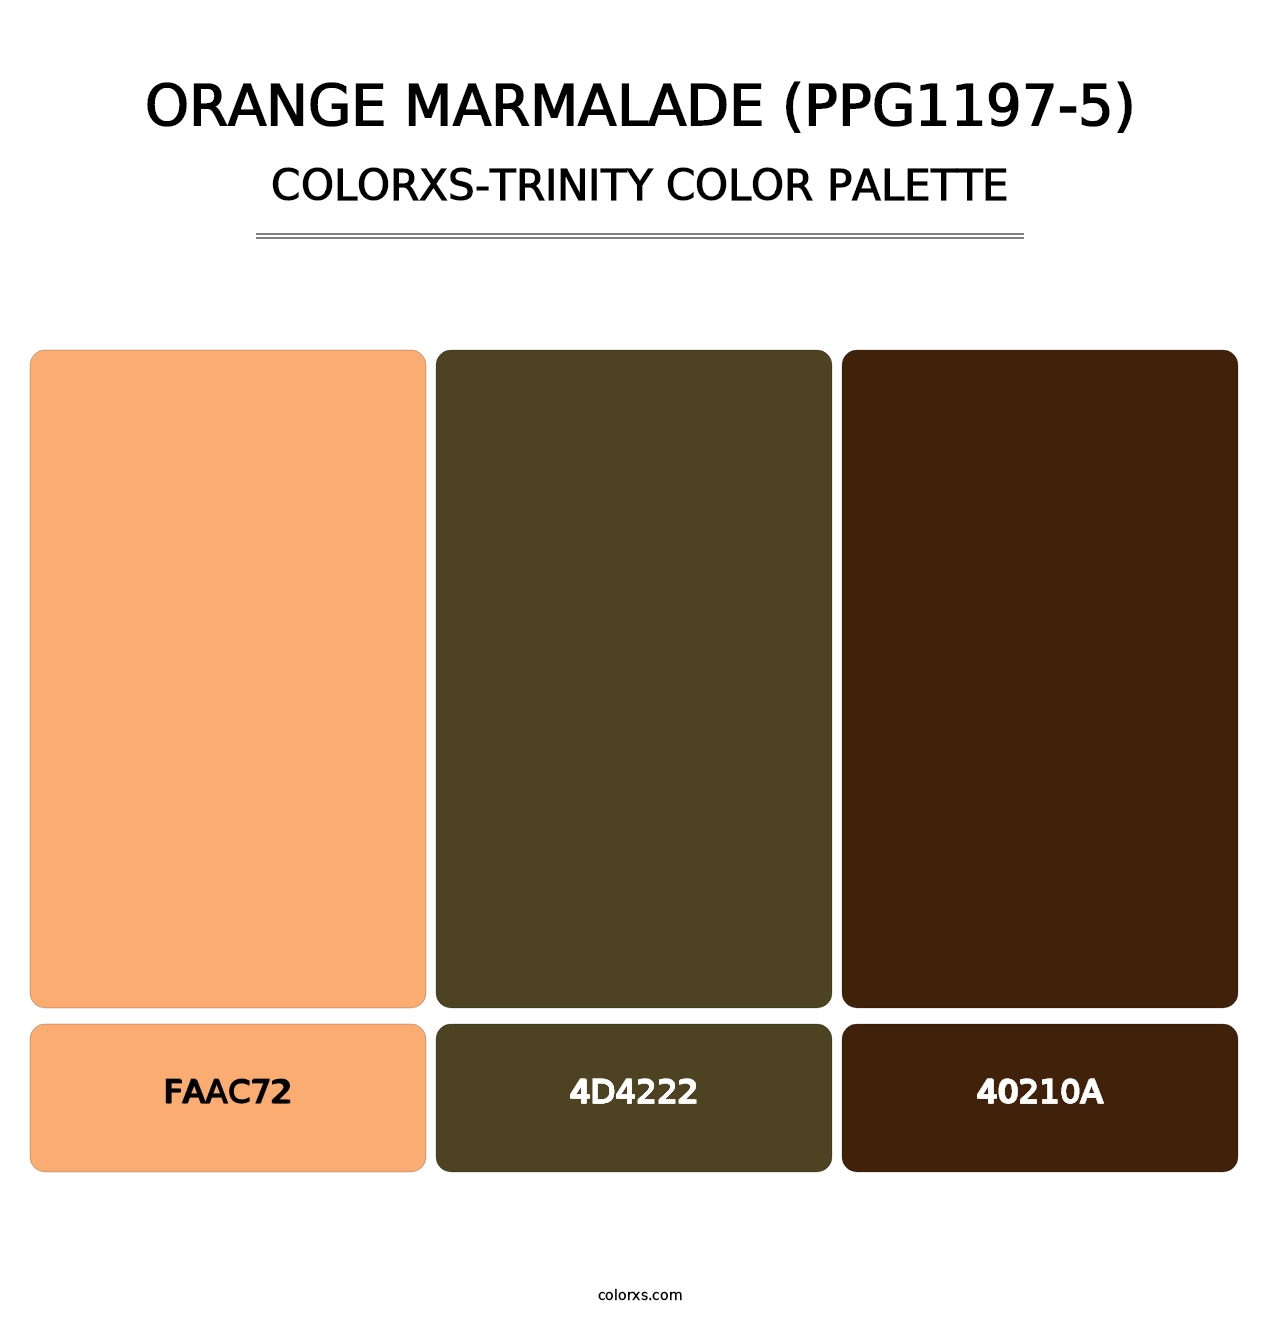 Orange Marmalade (PPG1197-5) - Colorxs Trinity Palette